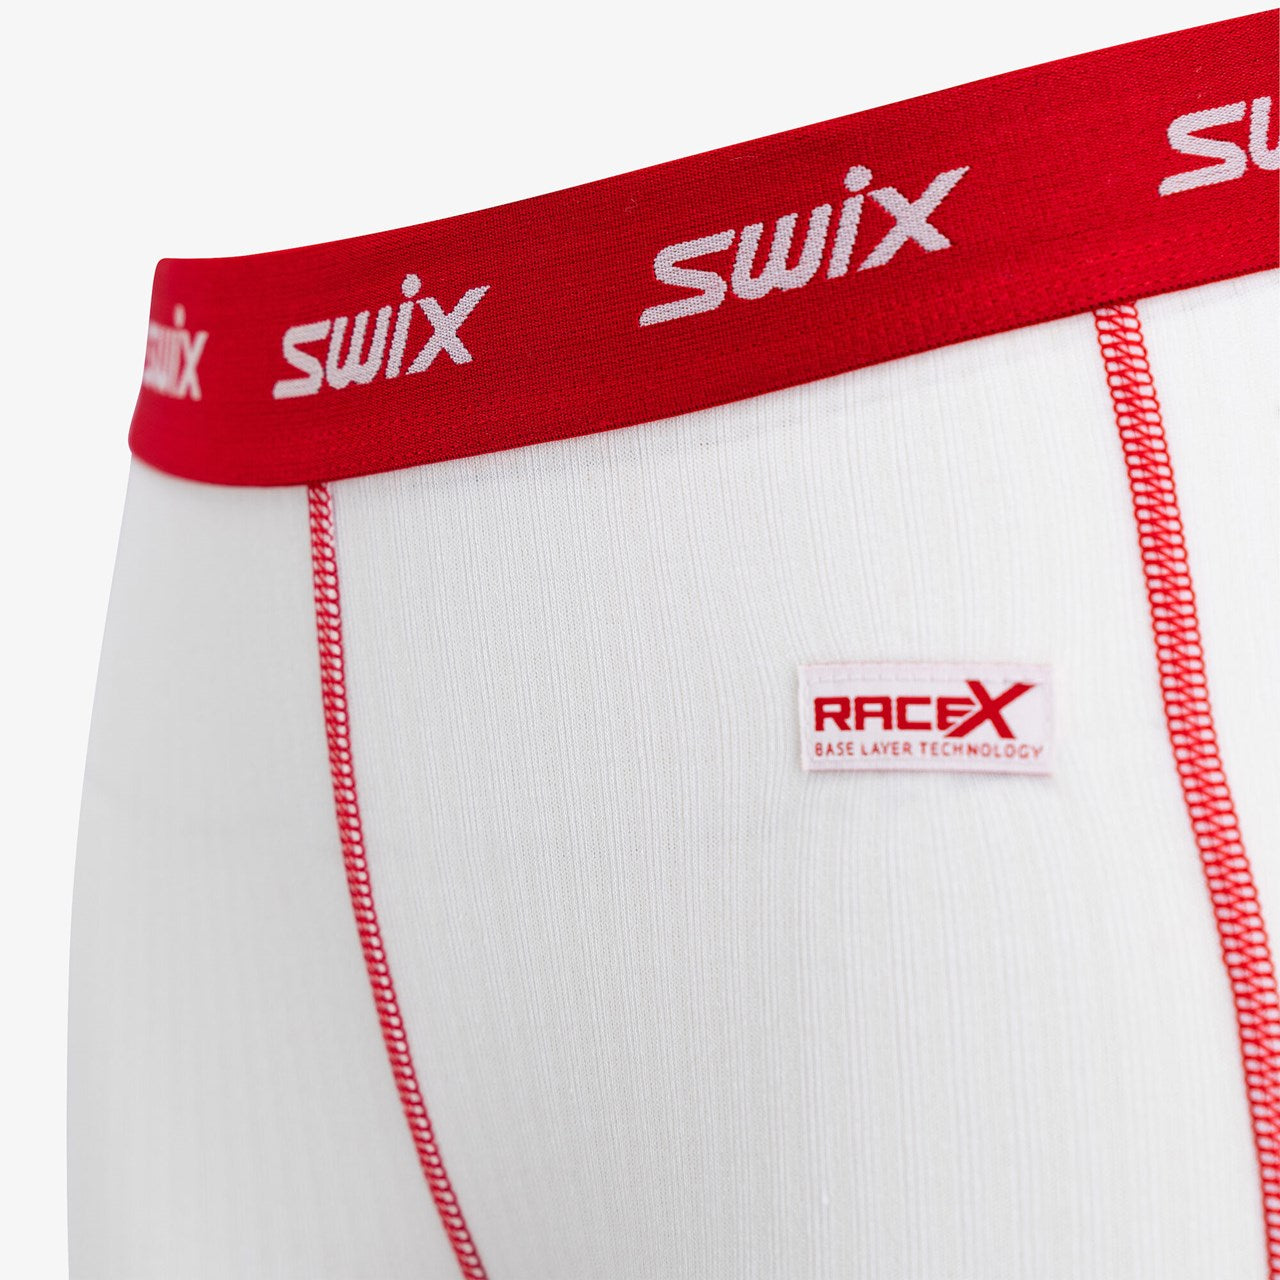 Swix RaceX Bodywear Pants Women